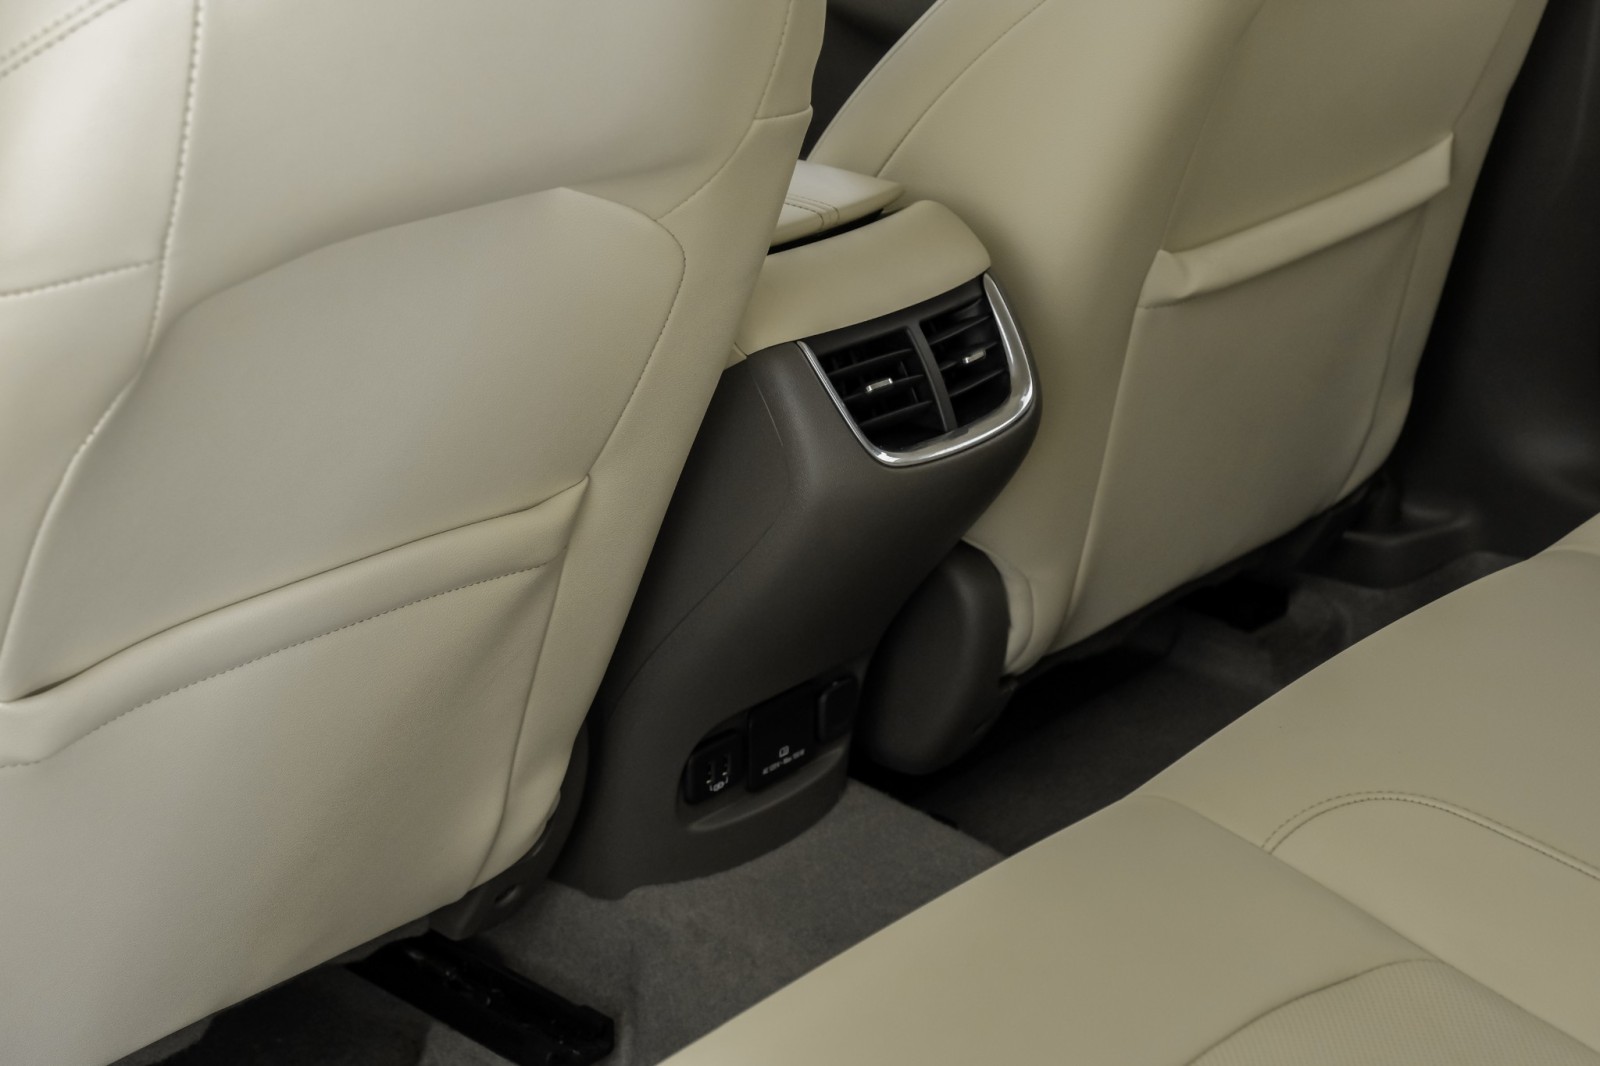 2019 Chevrolet Malibu PREMIER NAVIGATION LEATHER SEATS REAR CAMERA KEYEL 45